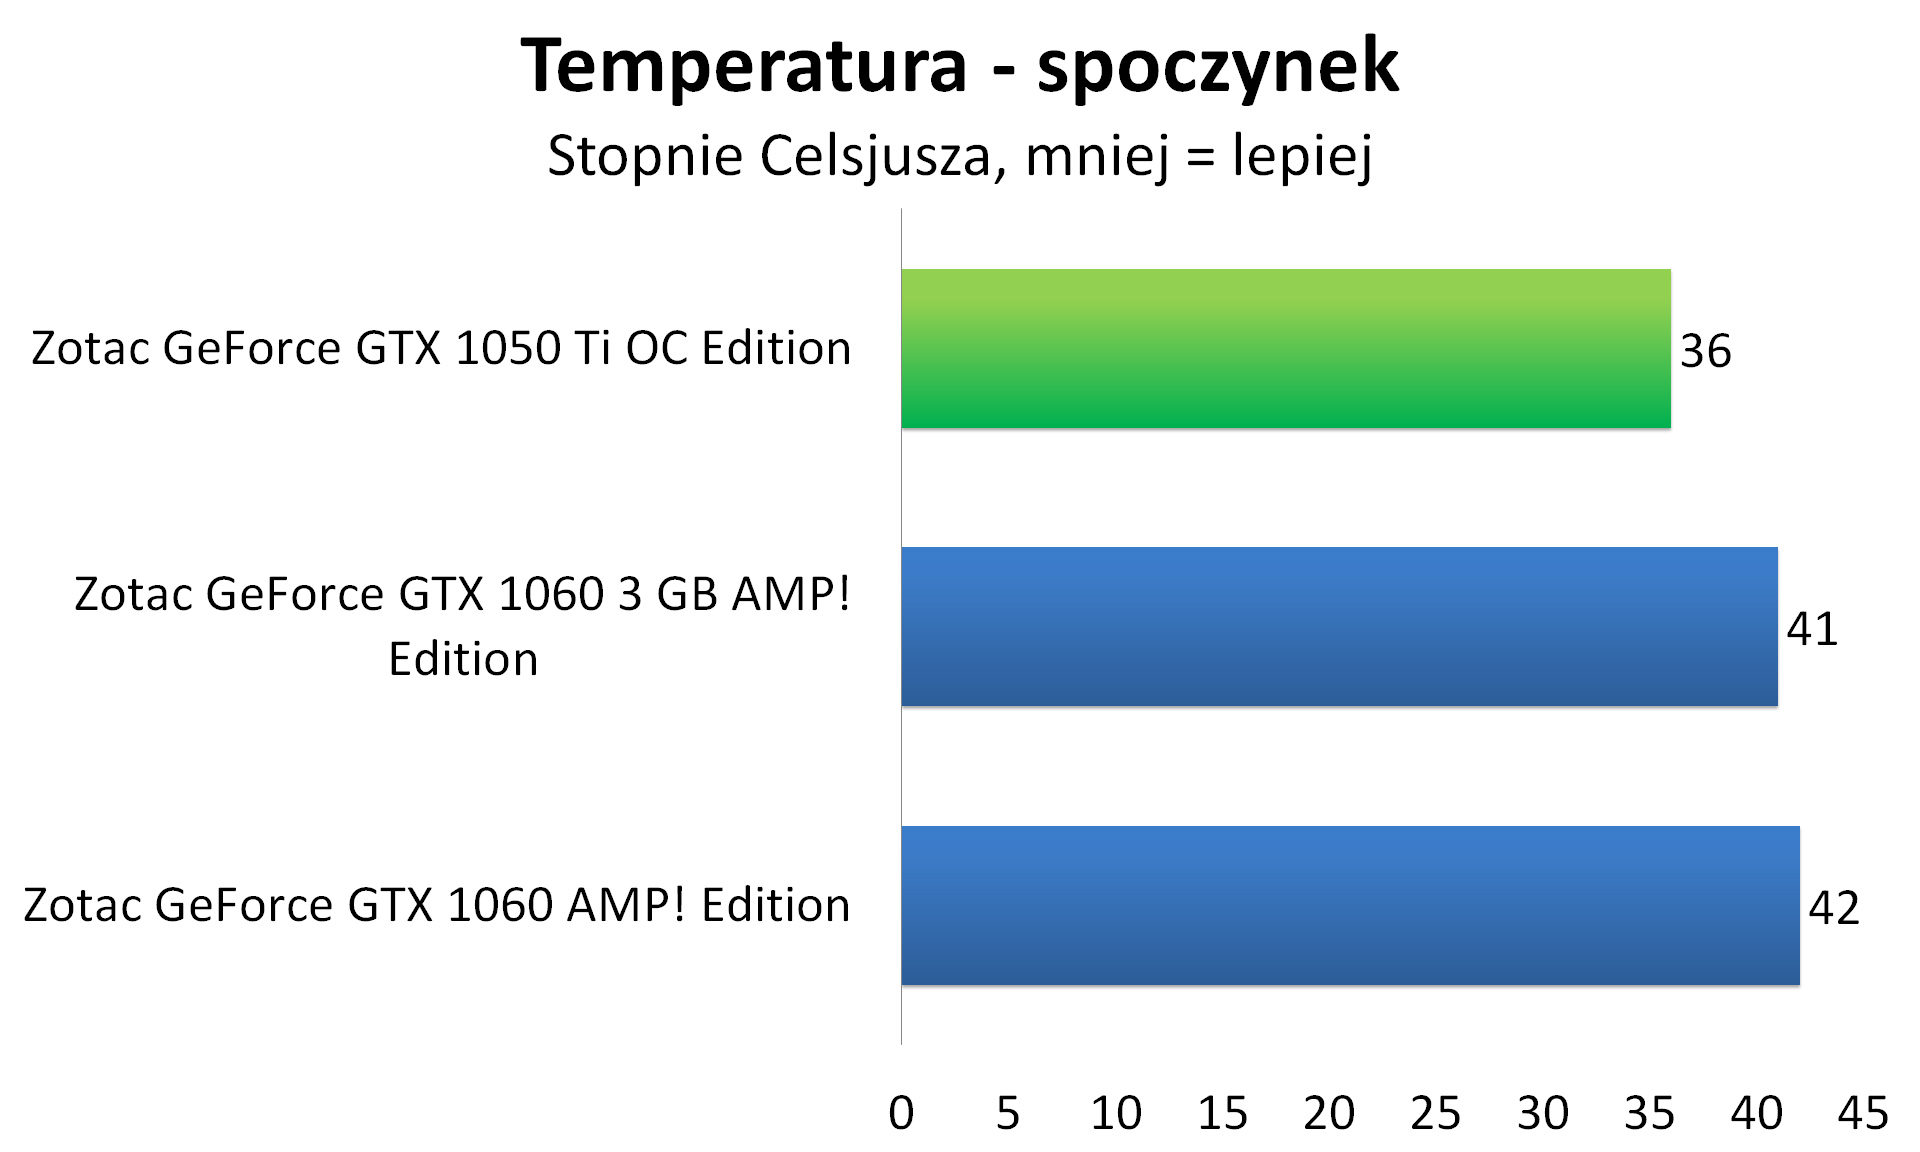 Zotac GeForce GTX 1050 Ti OC Edition - Temperatura - spoczynek